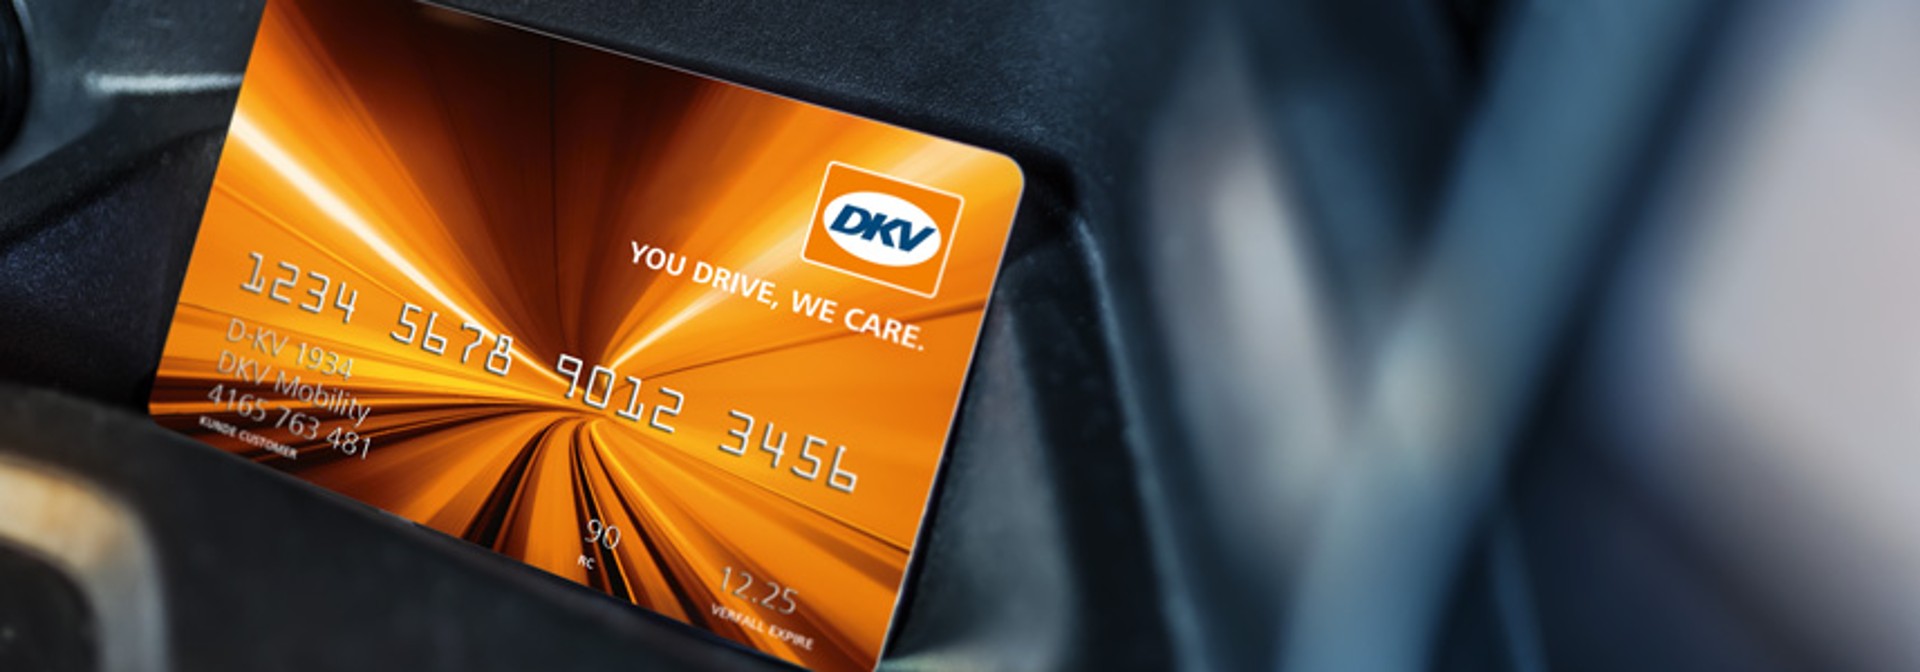 Mit DKV Card bezahlen.